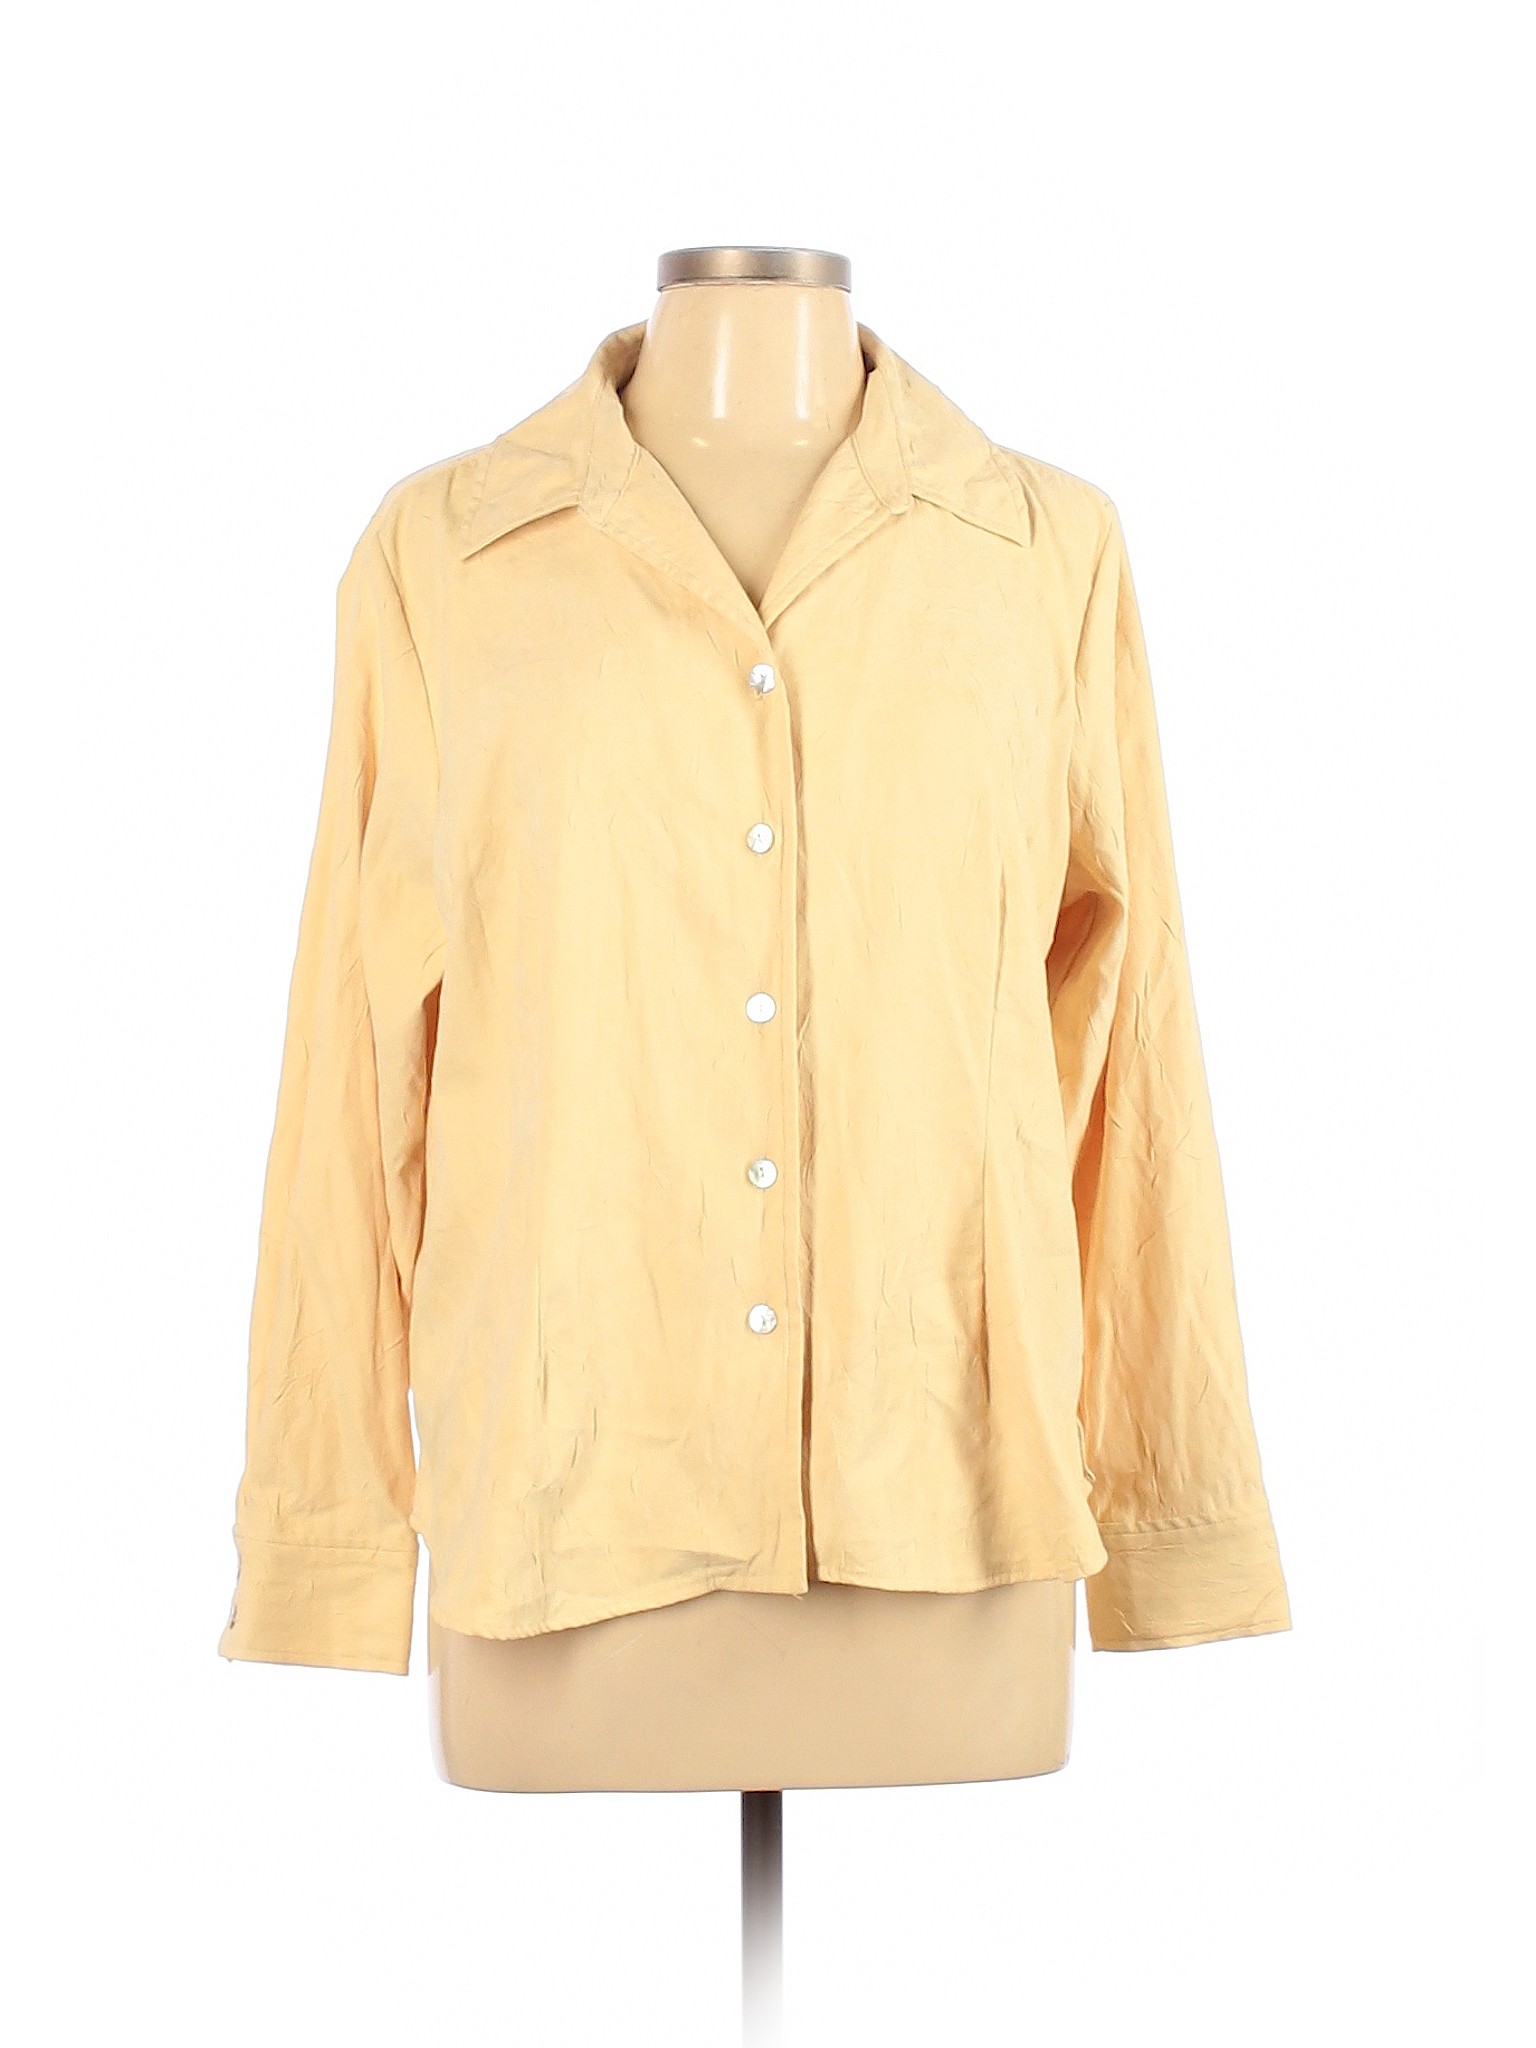 Coldwater Creek Women Yellow Long Sleeve Button-Down Shirt L Petites | eBay